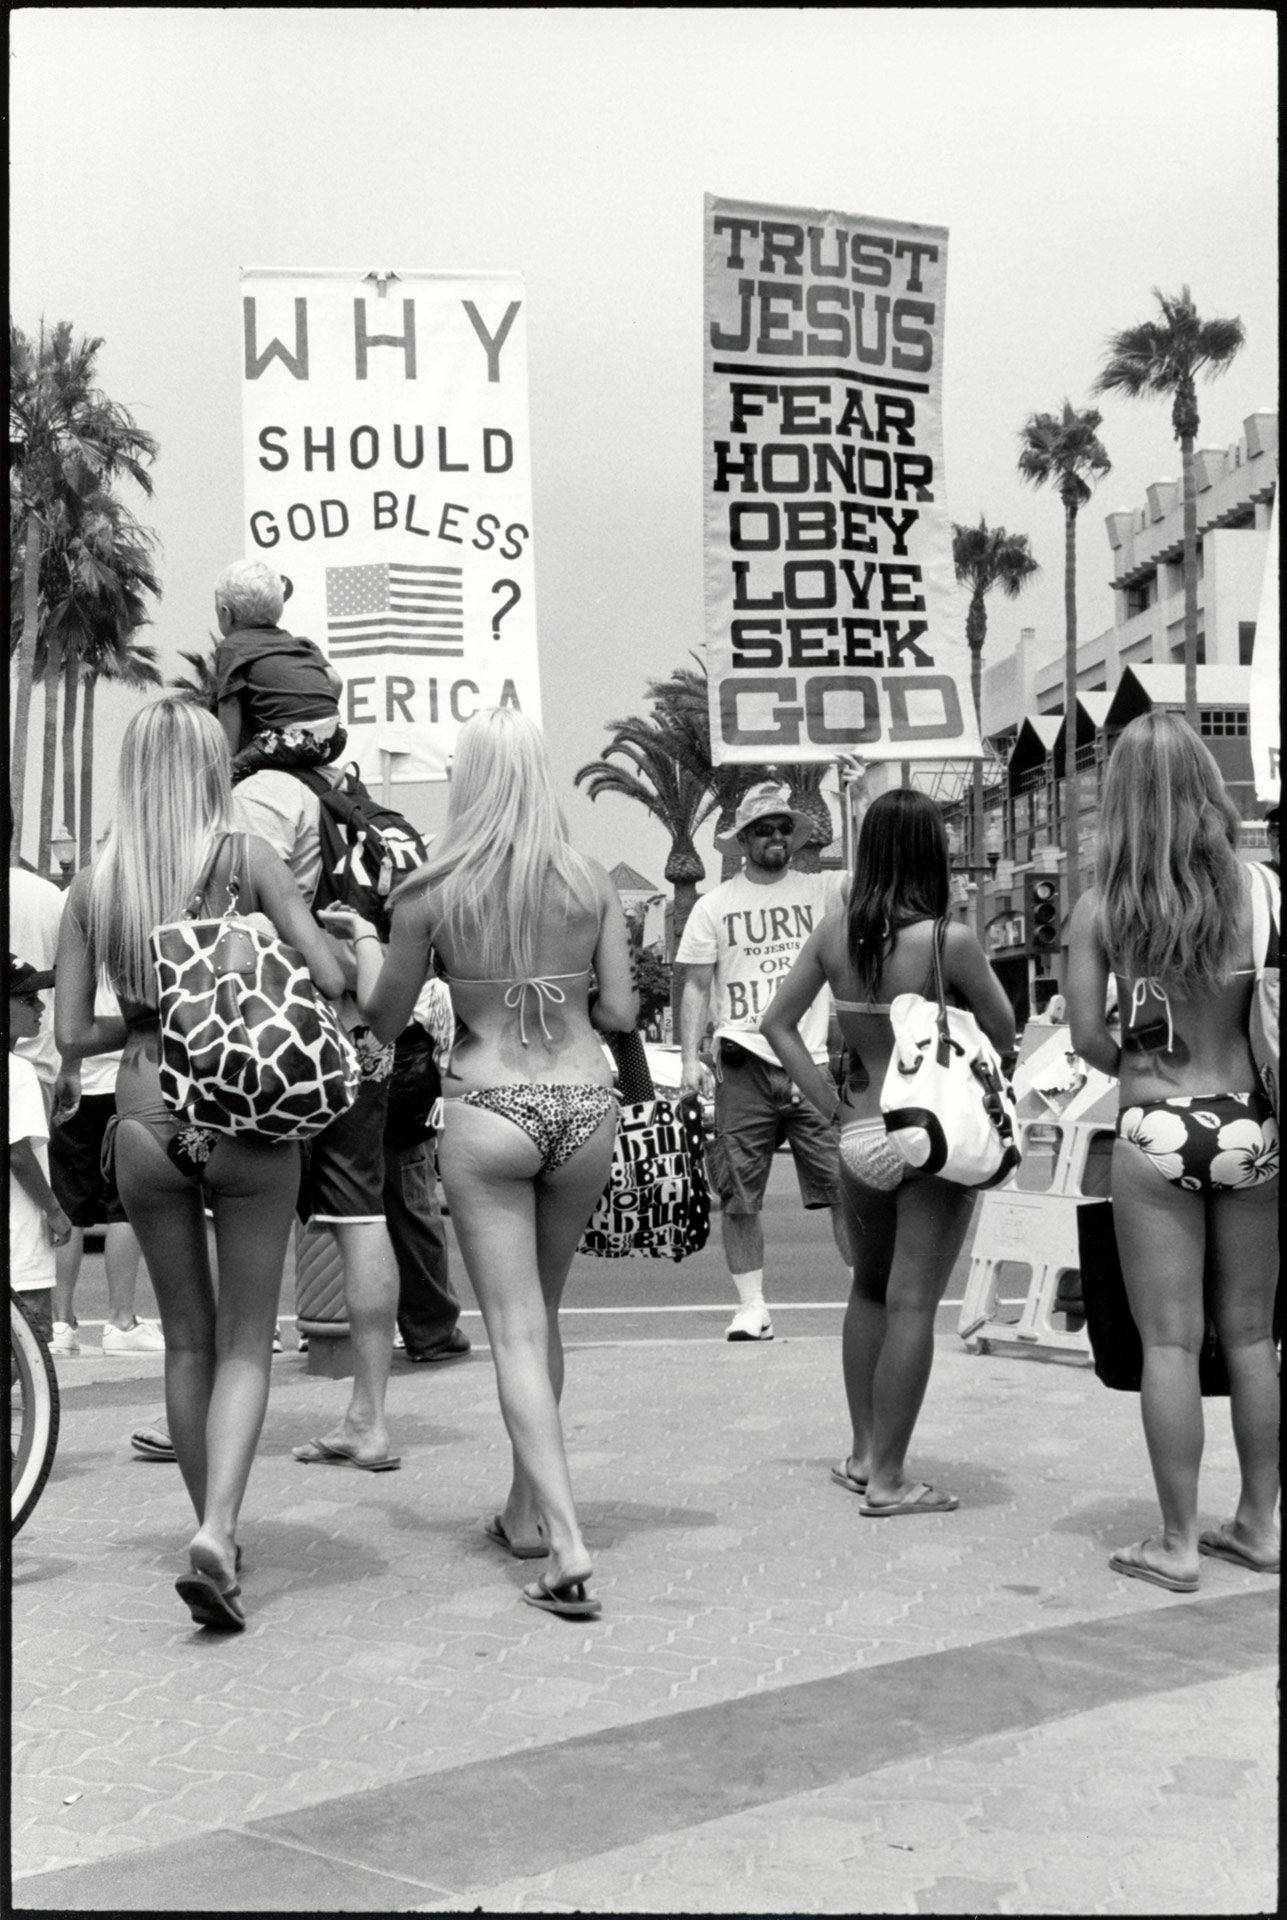 Bikini girls with religious sign